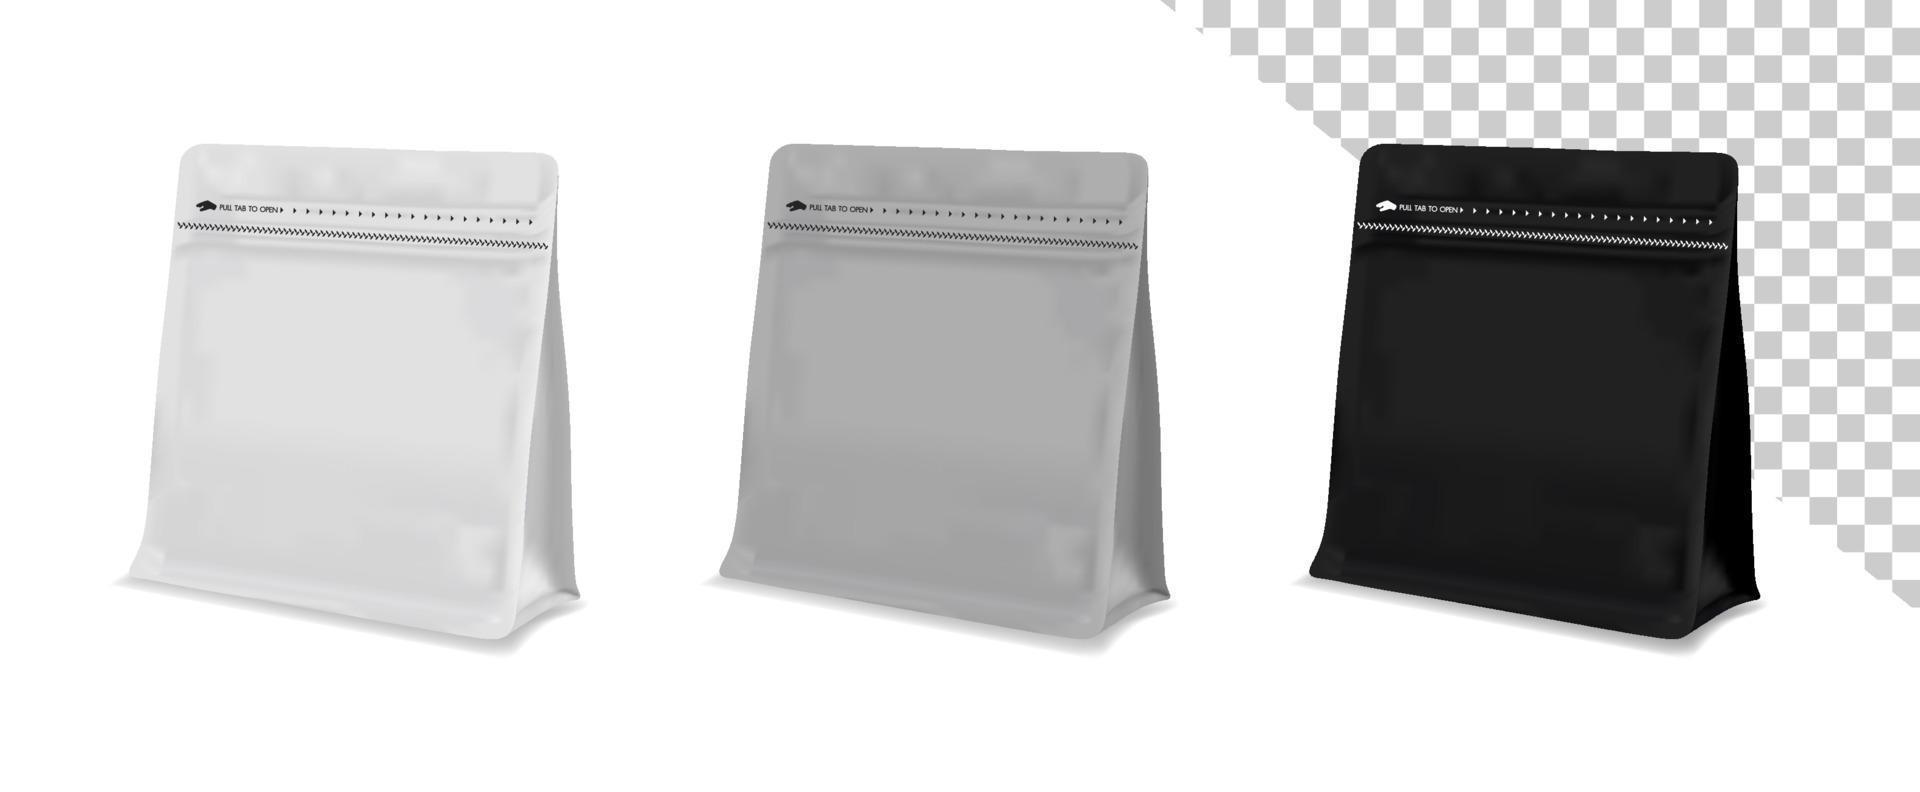 Blank coffee bag vector. Bag for coffee bean. Coffee drip package. vector